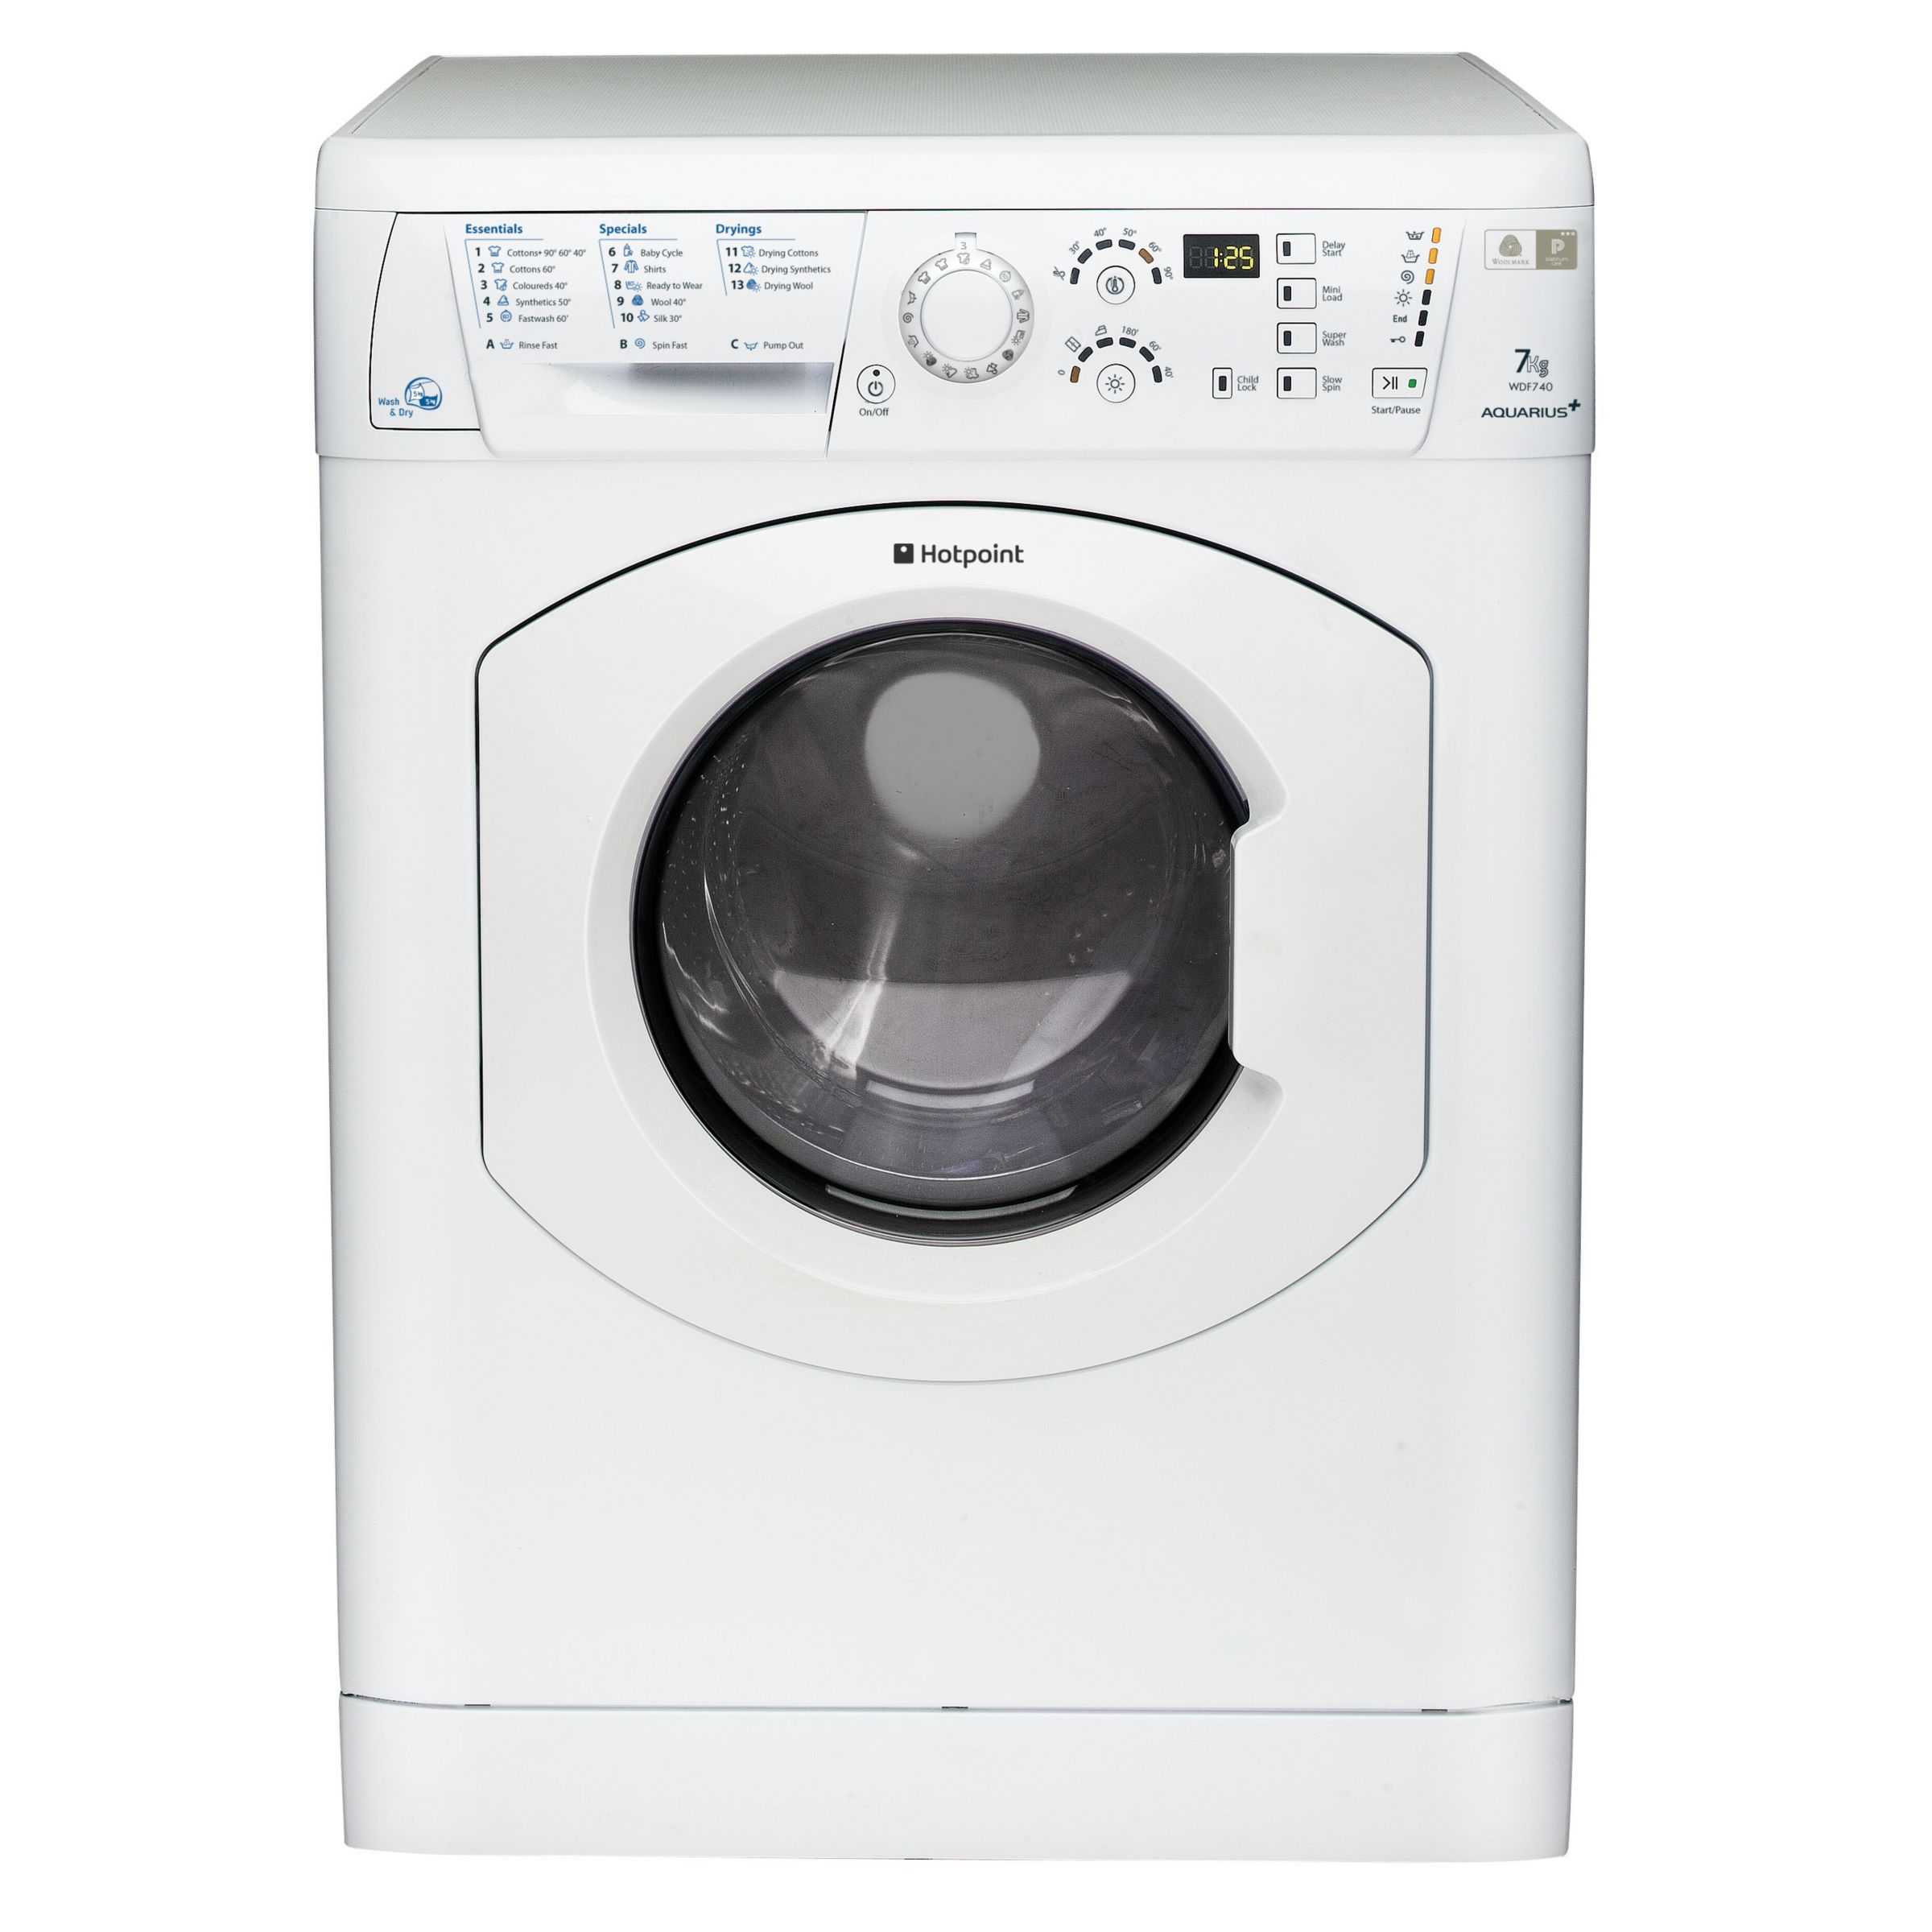 Hotpoint Aquarius+ WDF740P Washer Dryer, White at JohnLewis